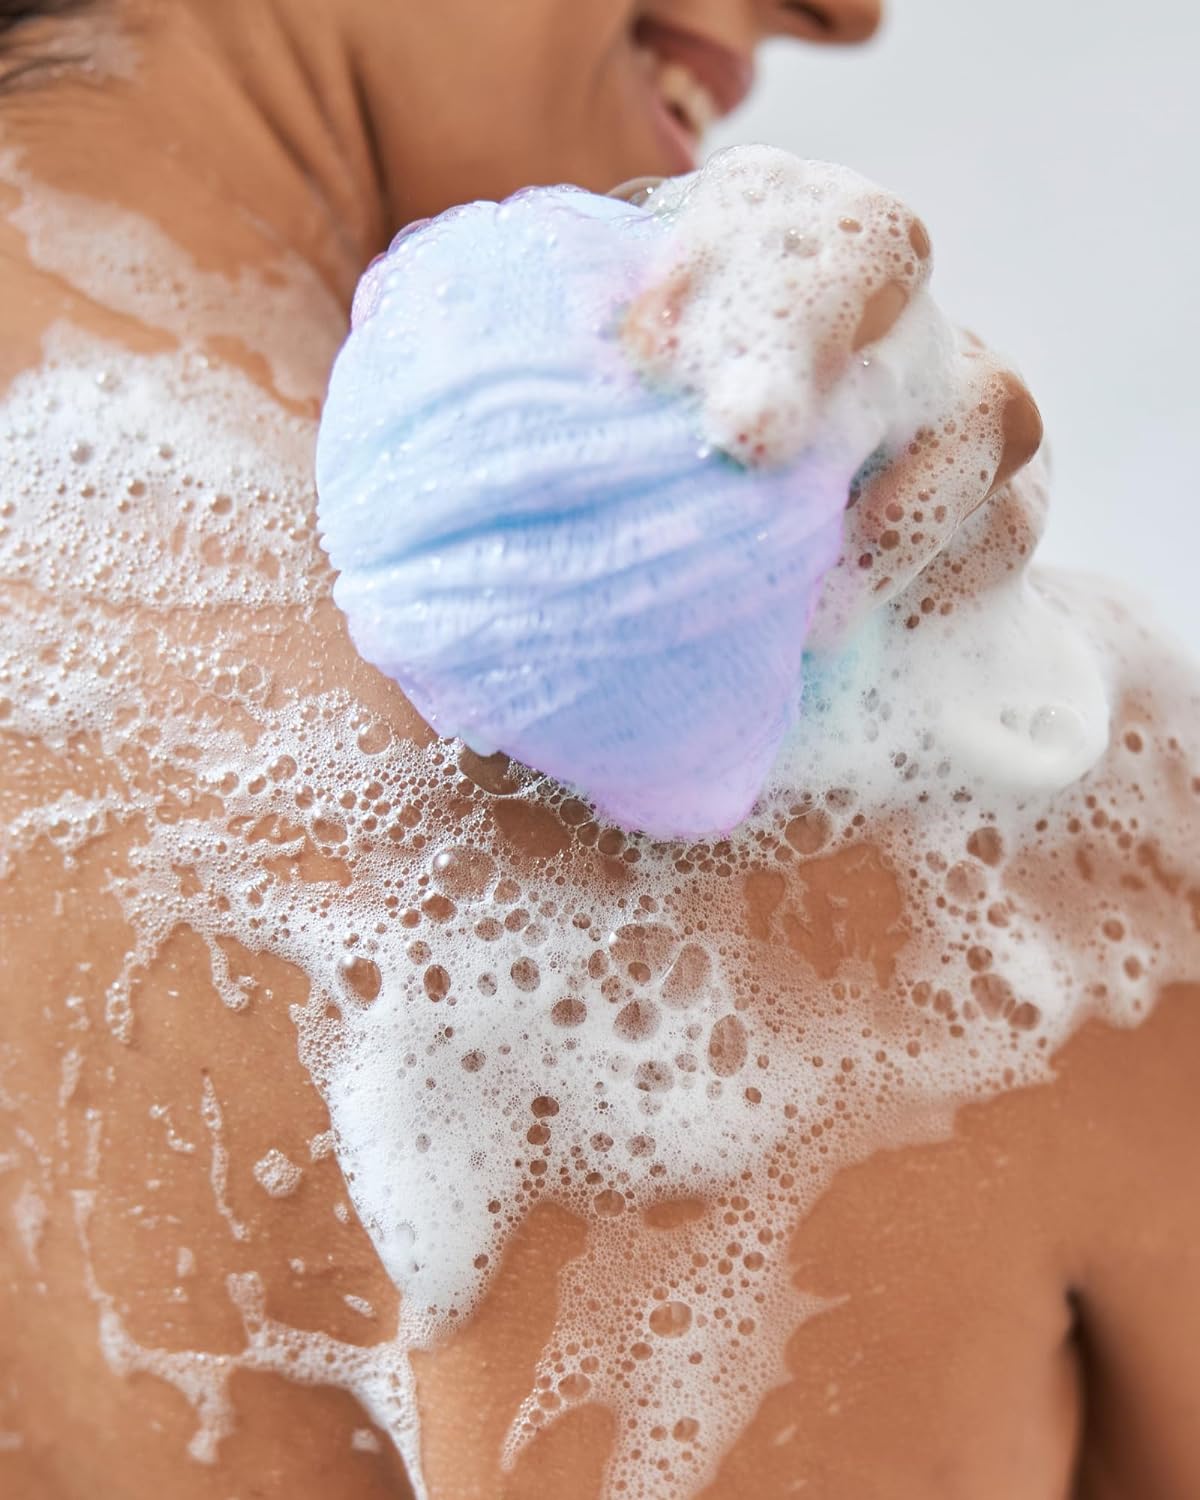 Bliss Women's Loofah - 4 Pack Exfoliating Mesh Shower Scrubber - Large Bath Sponge Body Pouf : Beauty & Personal Care